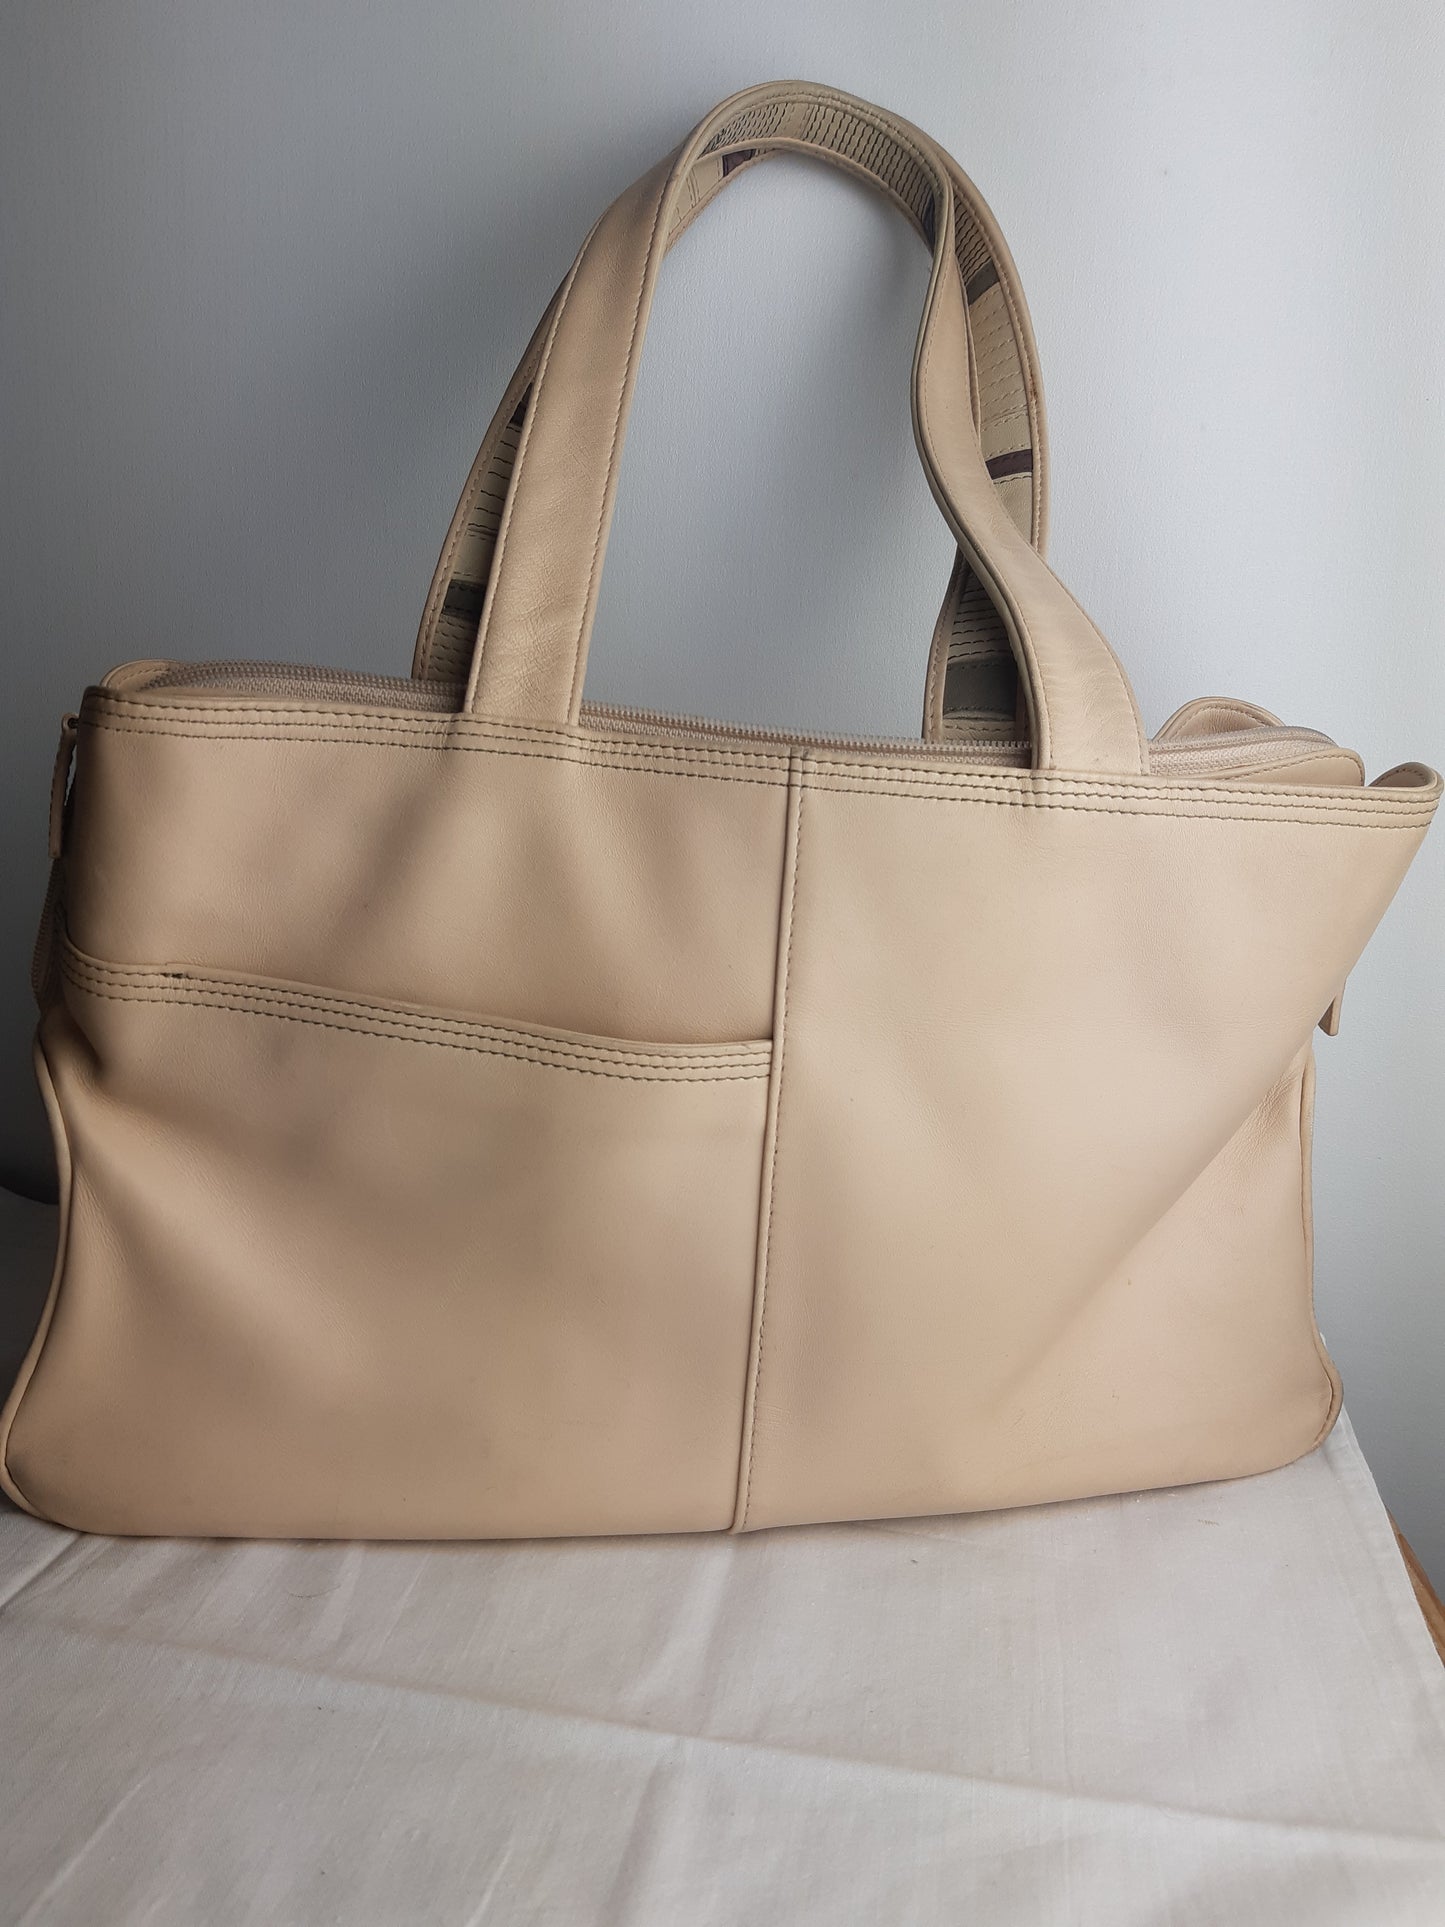 Radley Beige Leather Medium Handbag